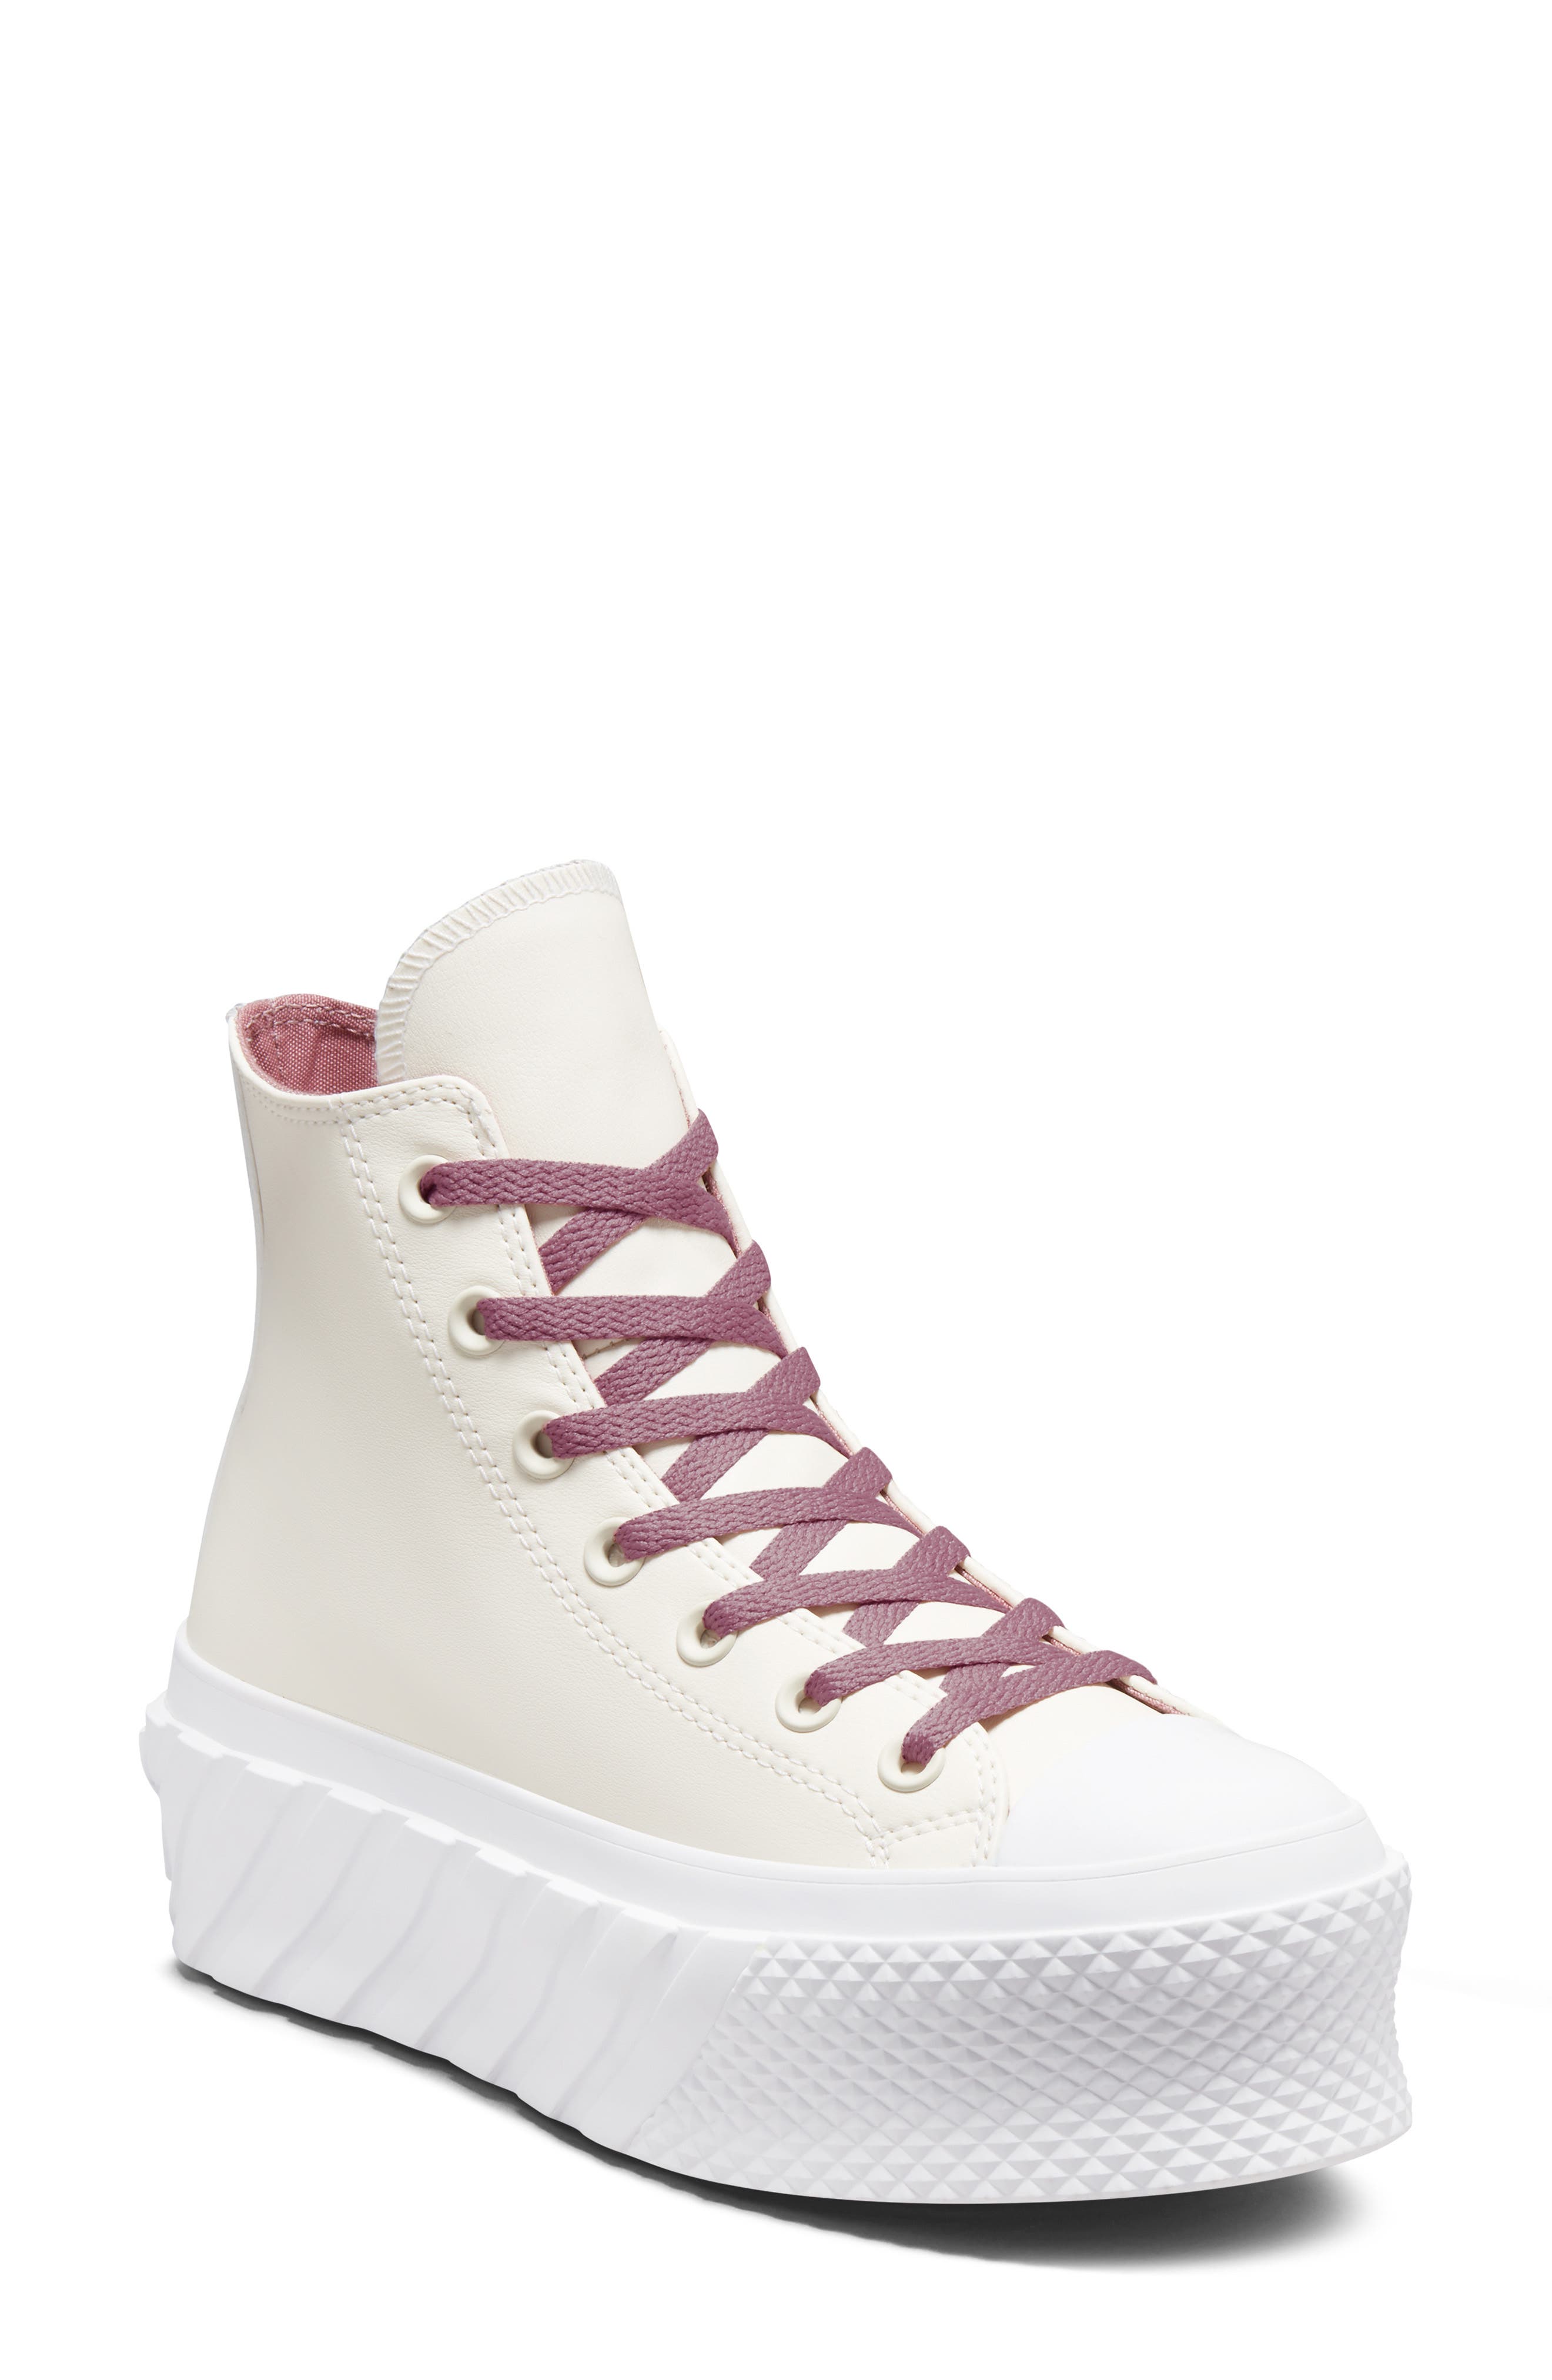 Converse Chuck Taylor(R) All Star(R) Lift 2X High Top Sneaker in Egret/Pink Aura/White